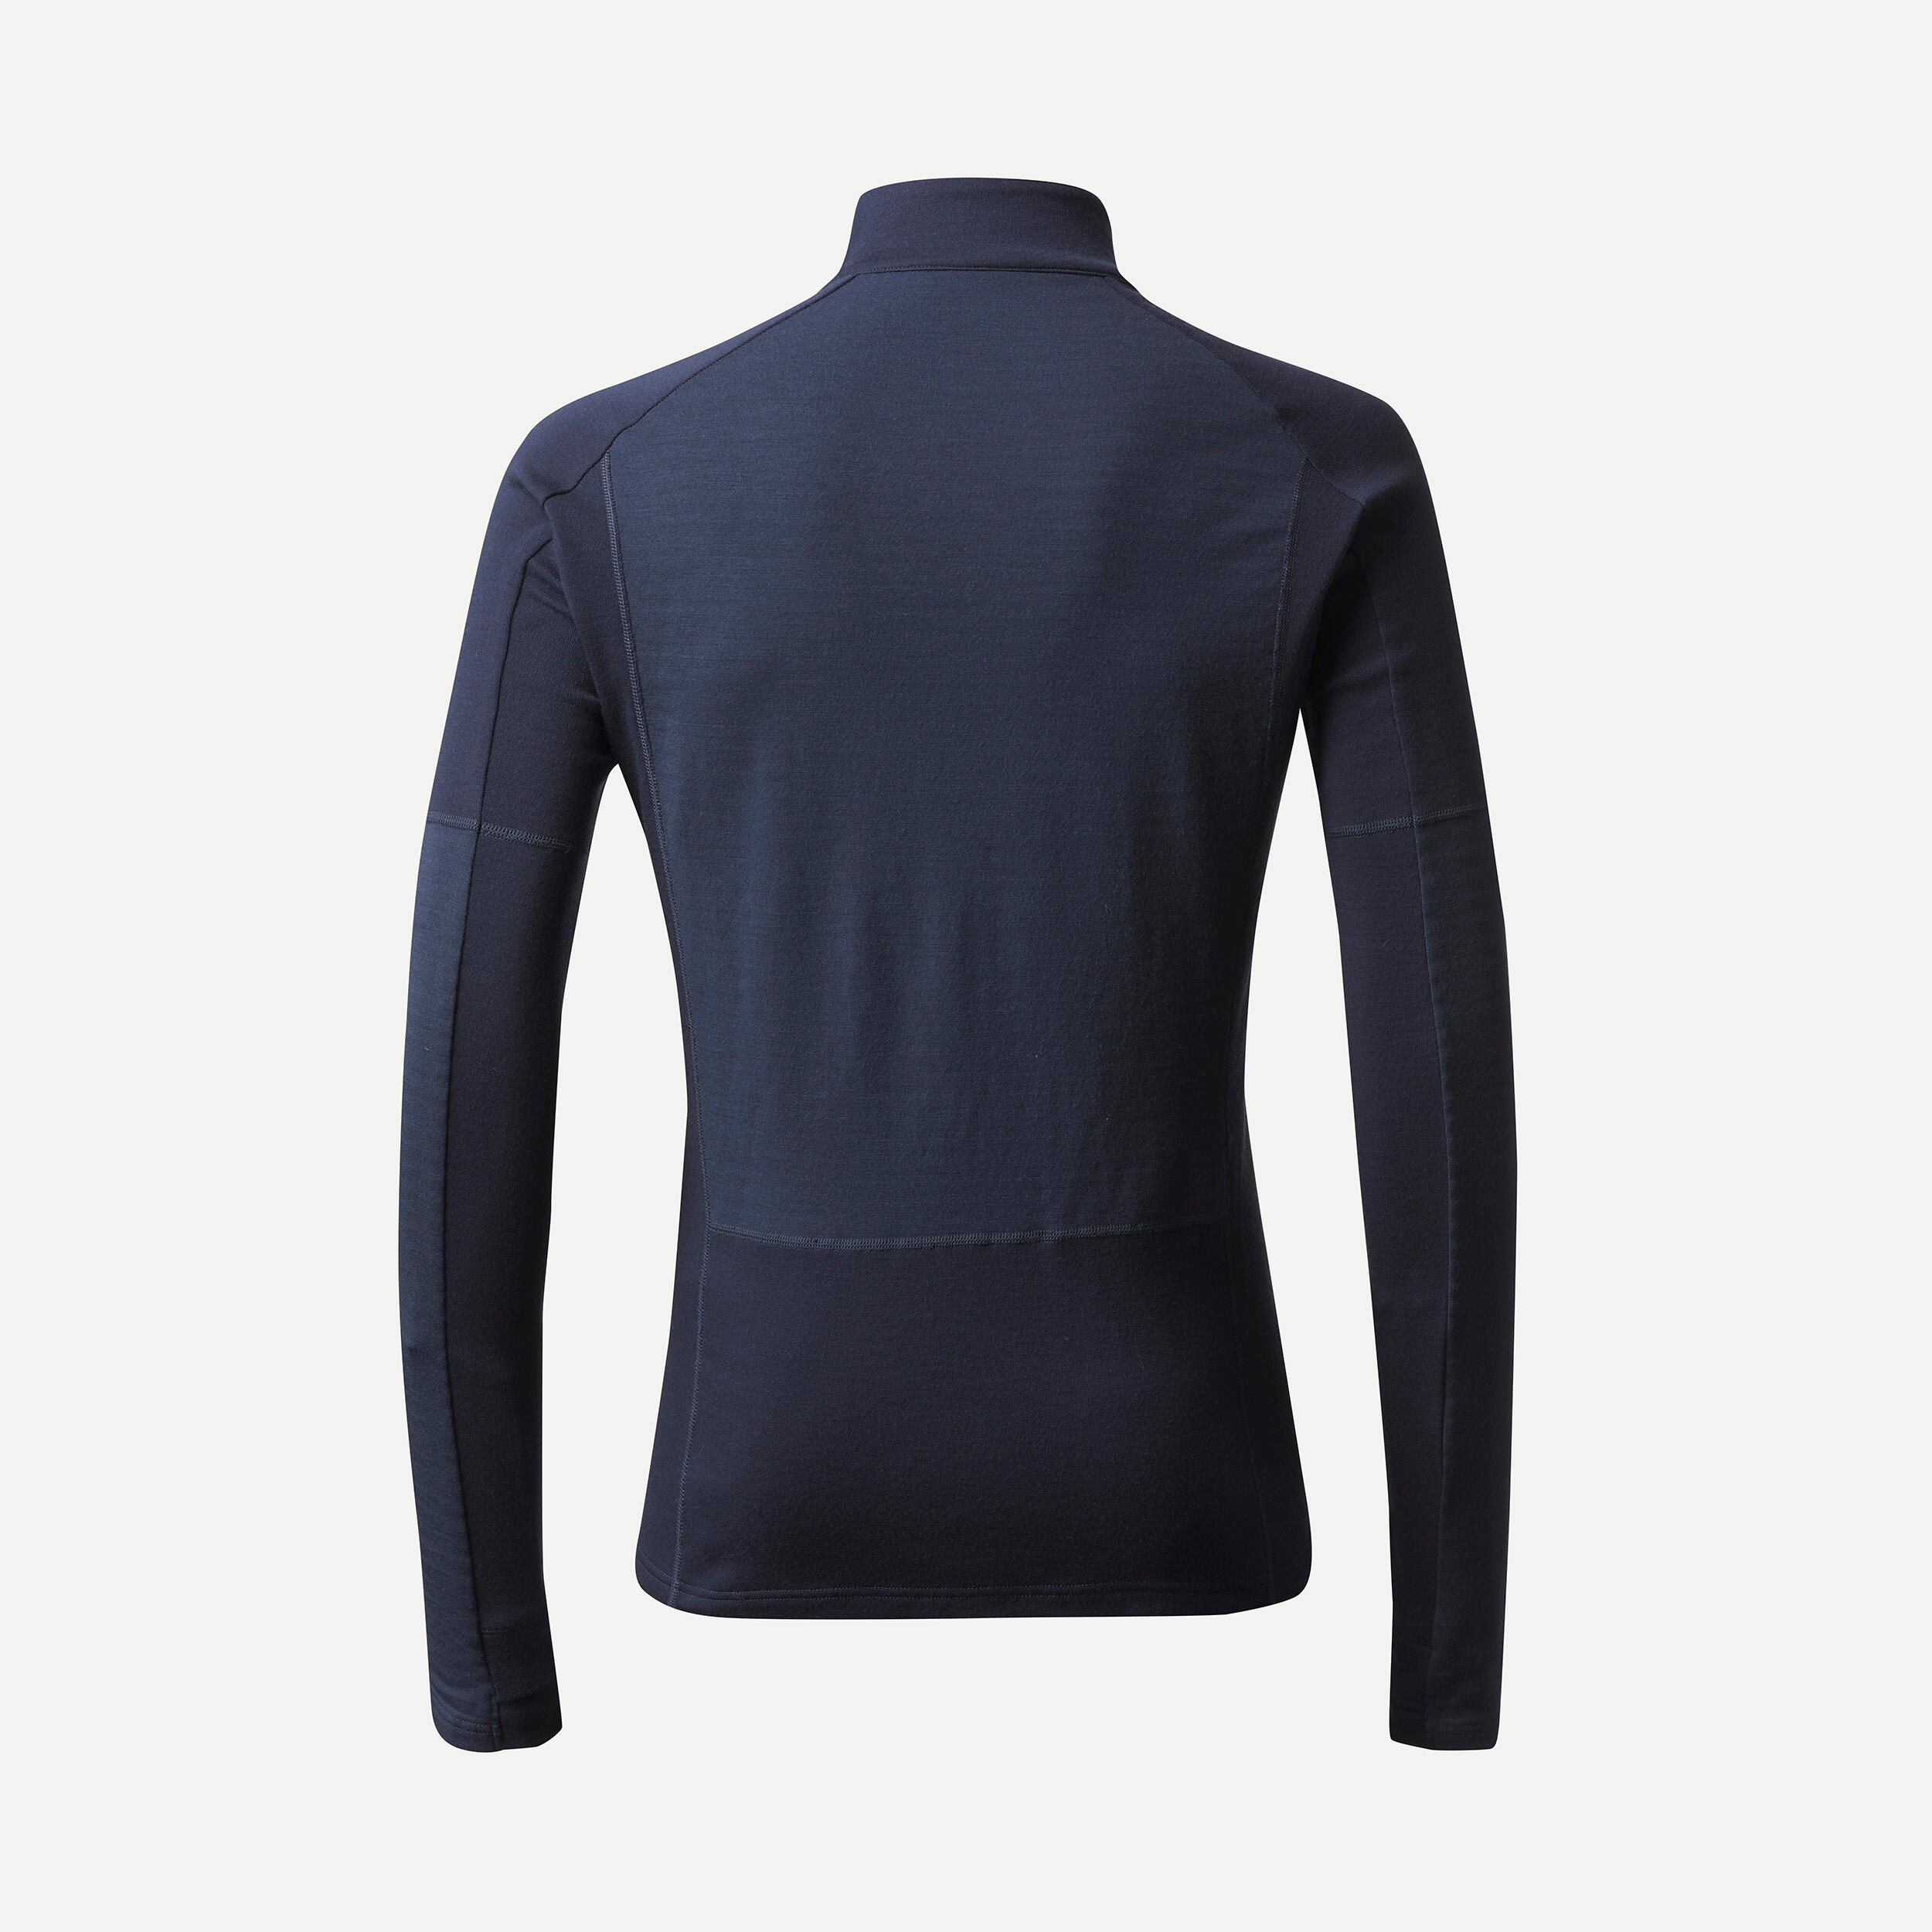 Men's Merino Wool Base Layer Top - BL 900 Blue - Asphalt blue - Wedze -  Decathlon